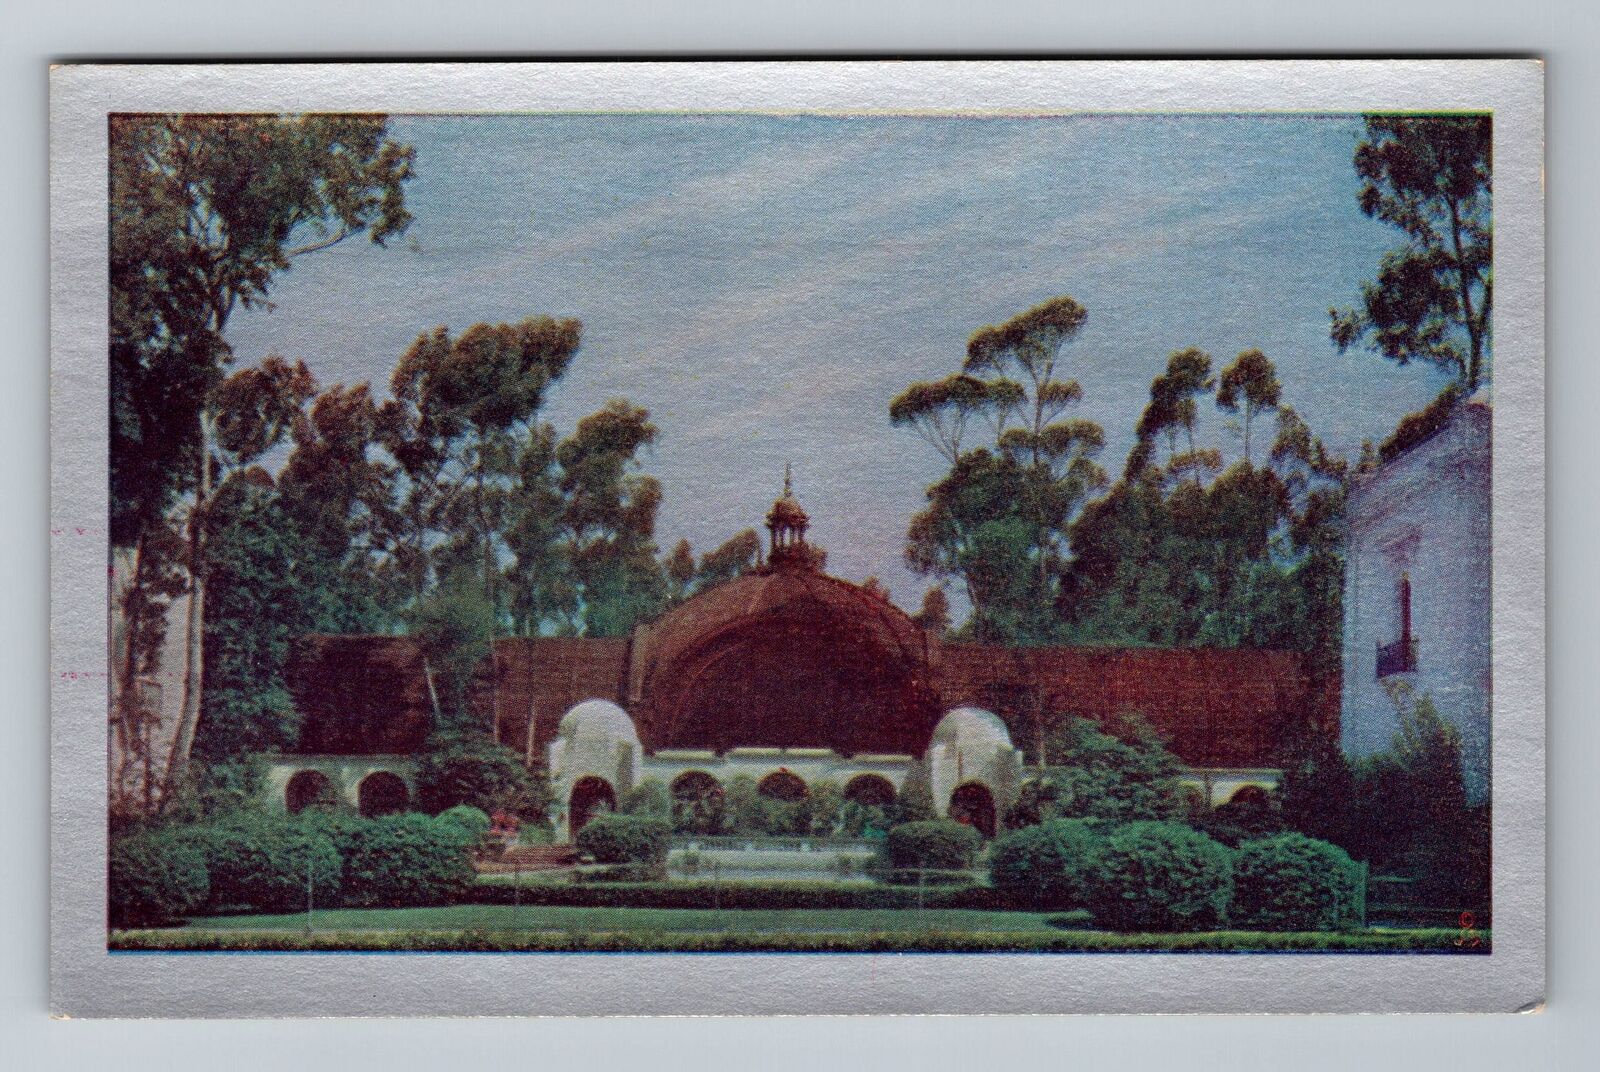 CA-California, The Botanical Building, Scenic Exterior, Vintage Postcard